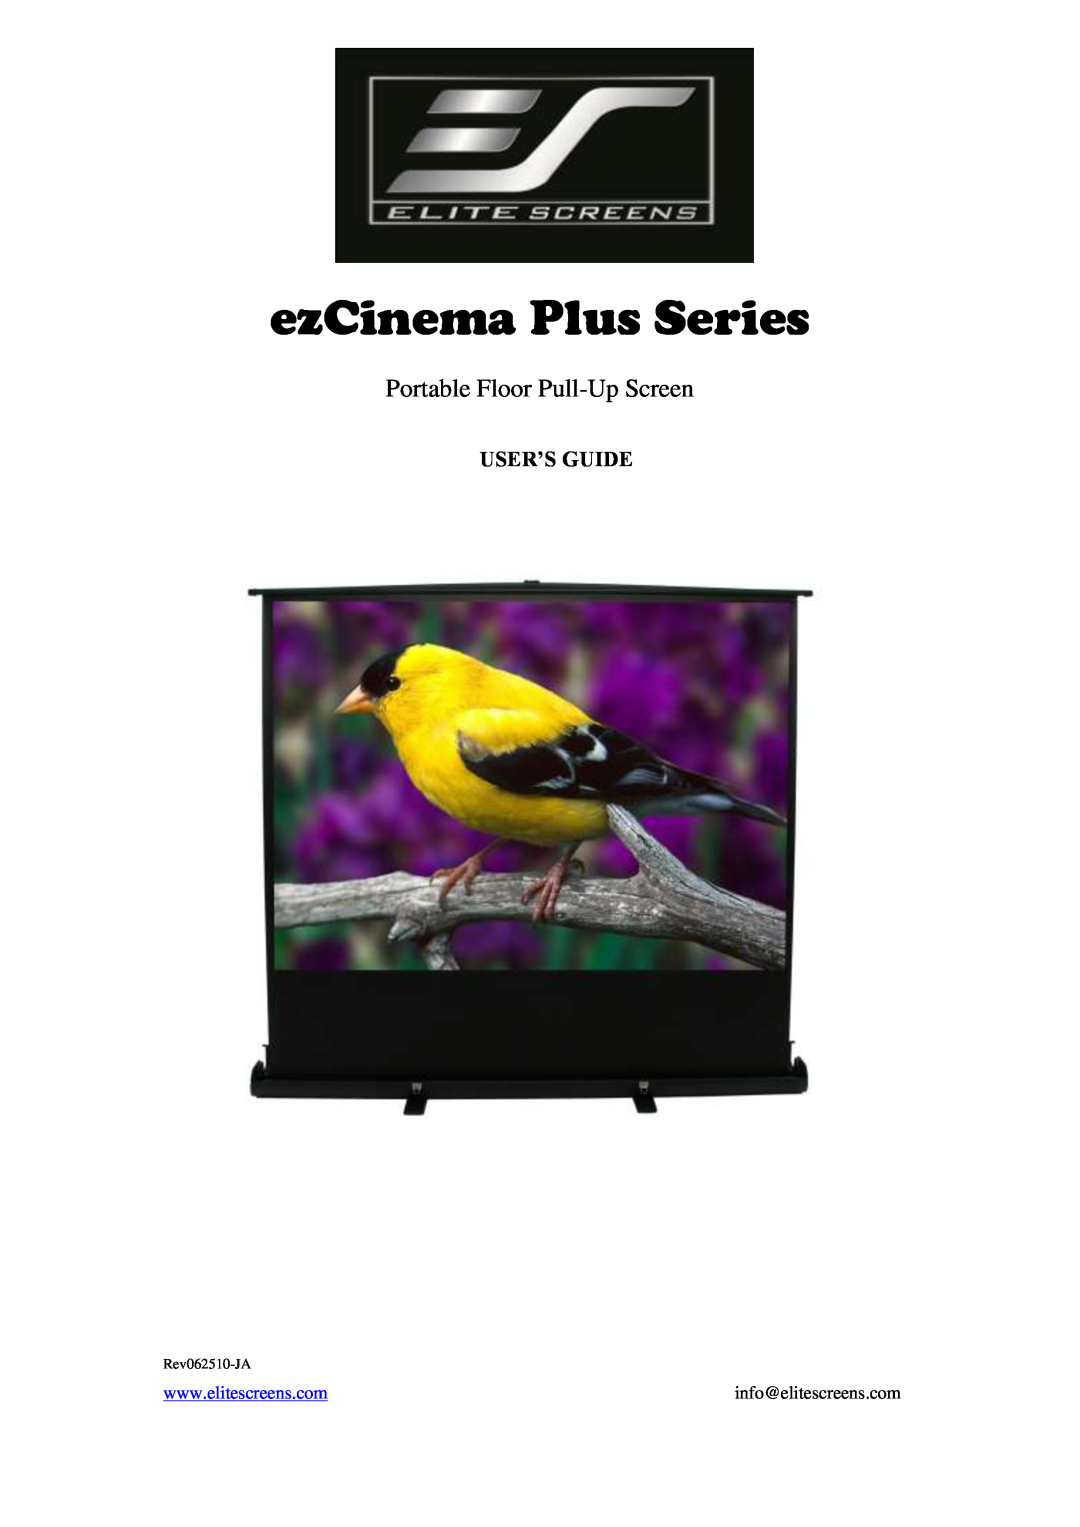 Elite Screens manual User’S Guide, ezCinema Plus Series, Portable Floor Pull-Up Screen, info@elitescreens.com 